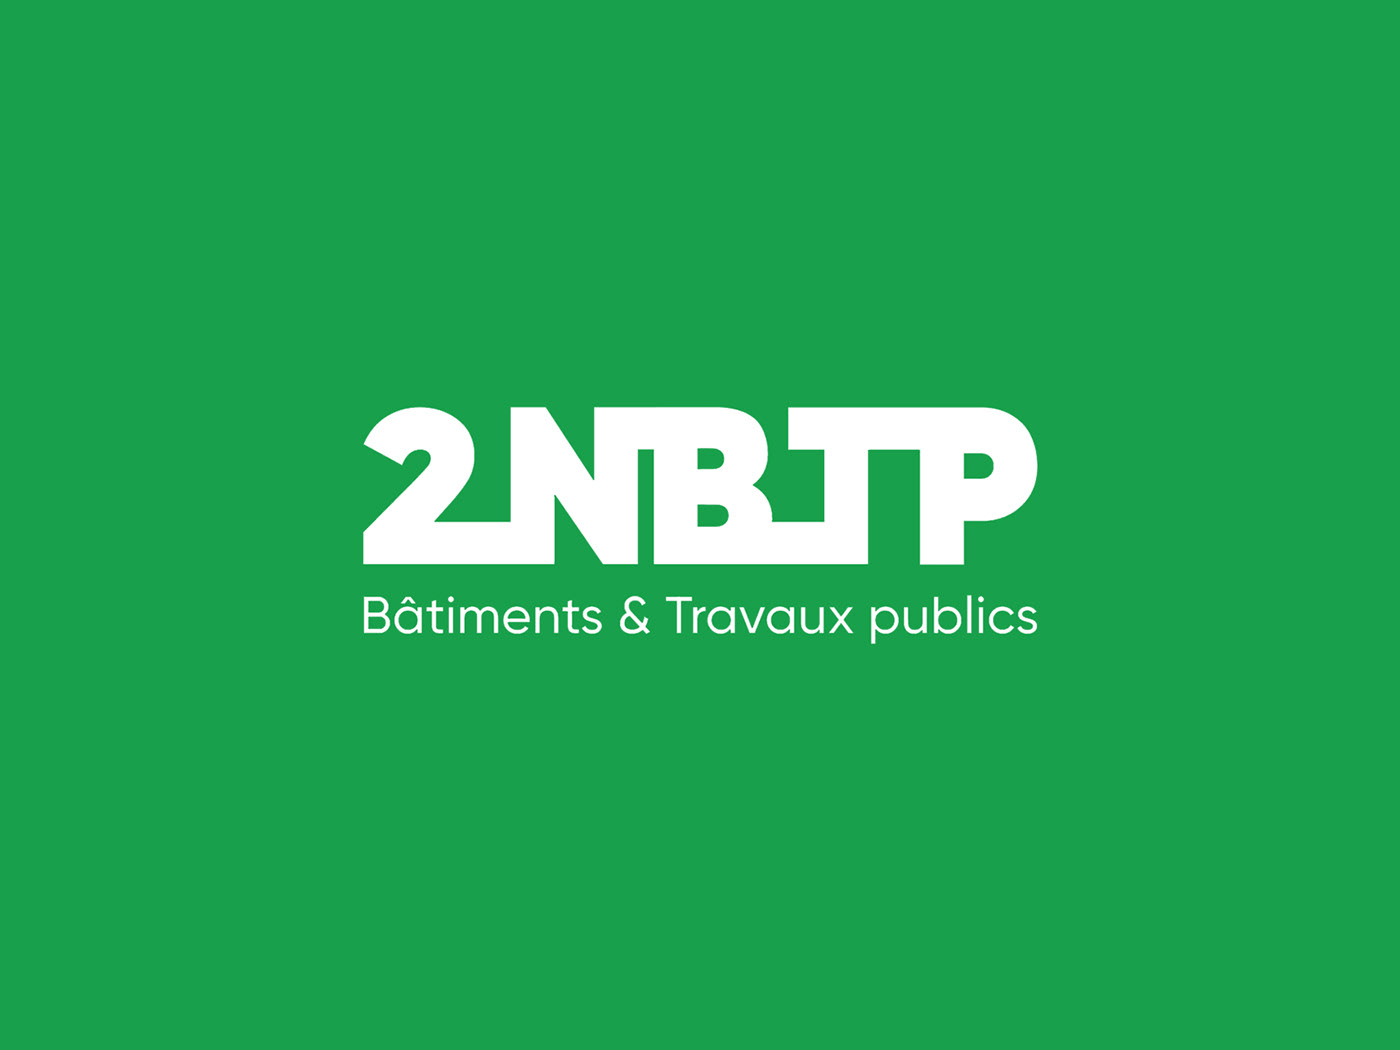 Brand Identity for 2NBTP